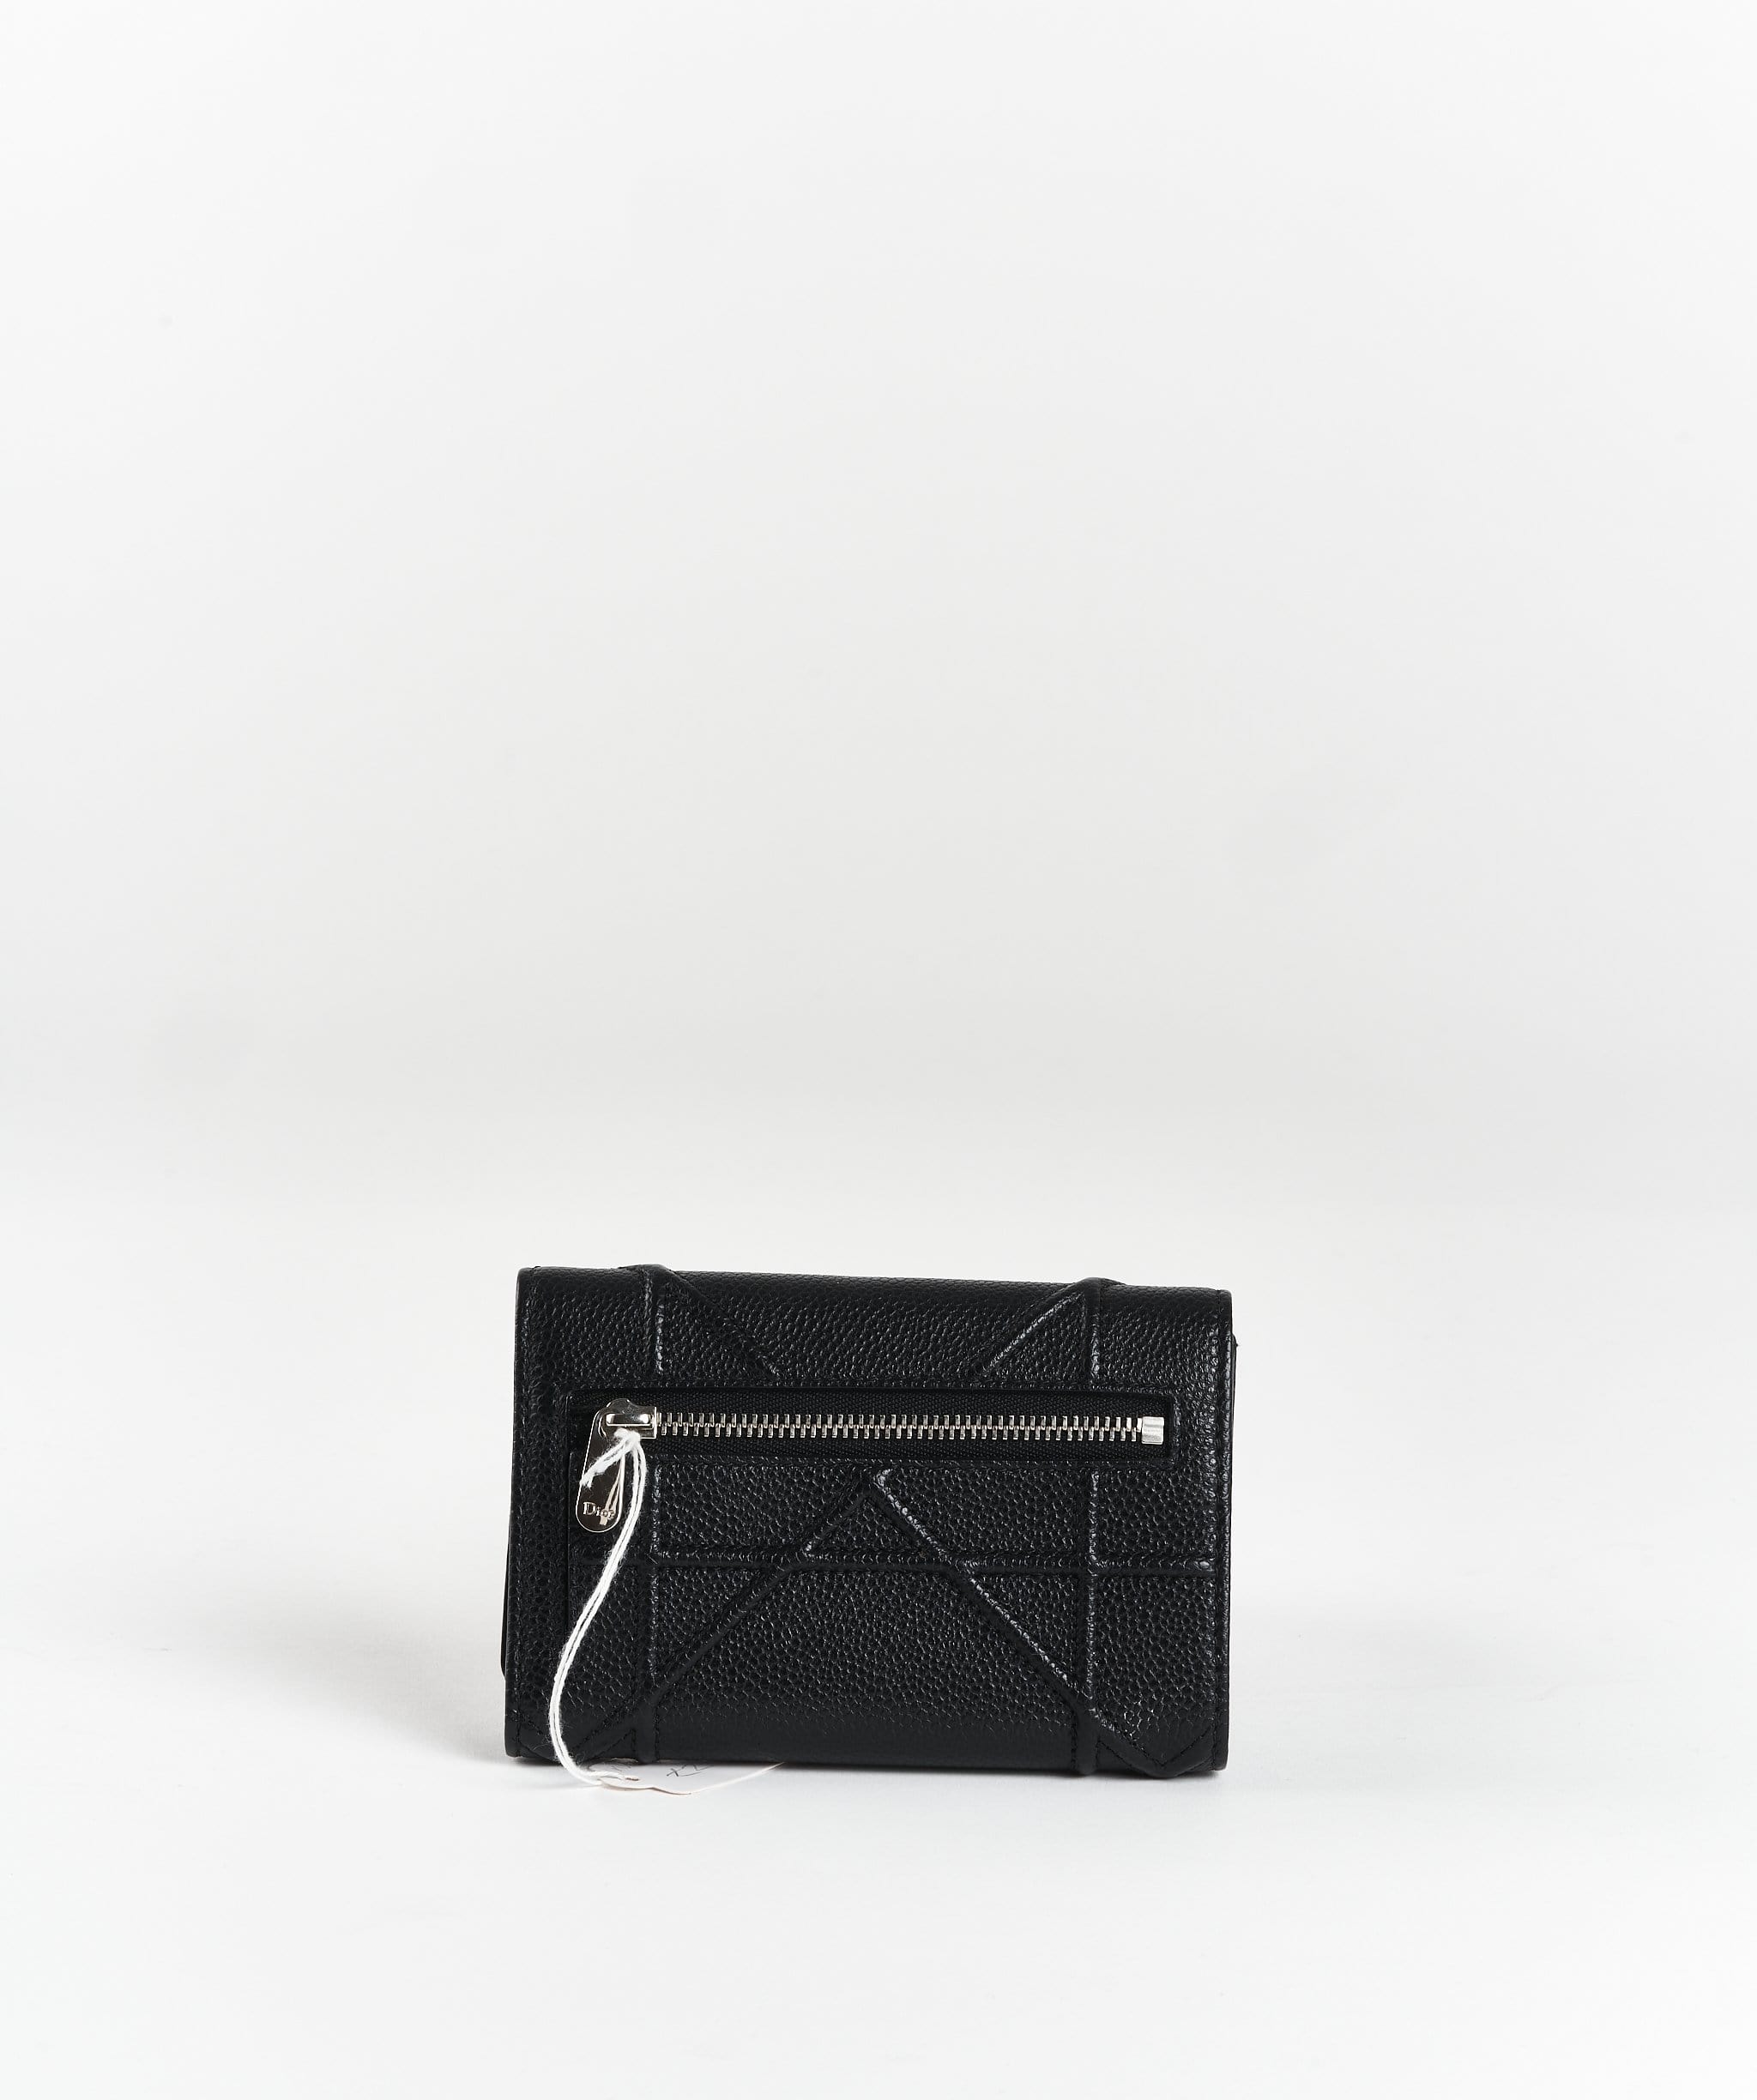 Christian Dior Diorama Wallet black